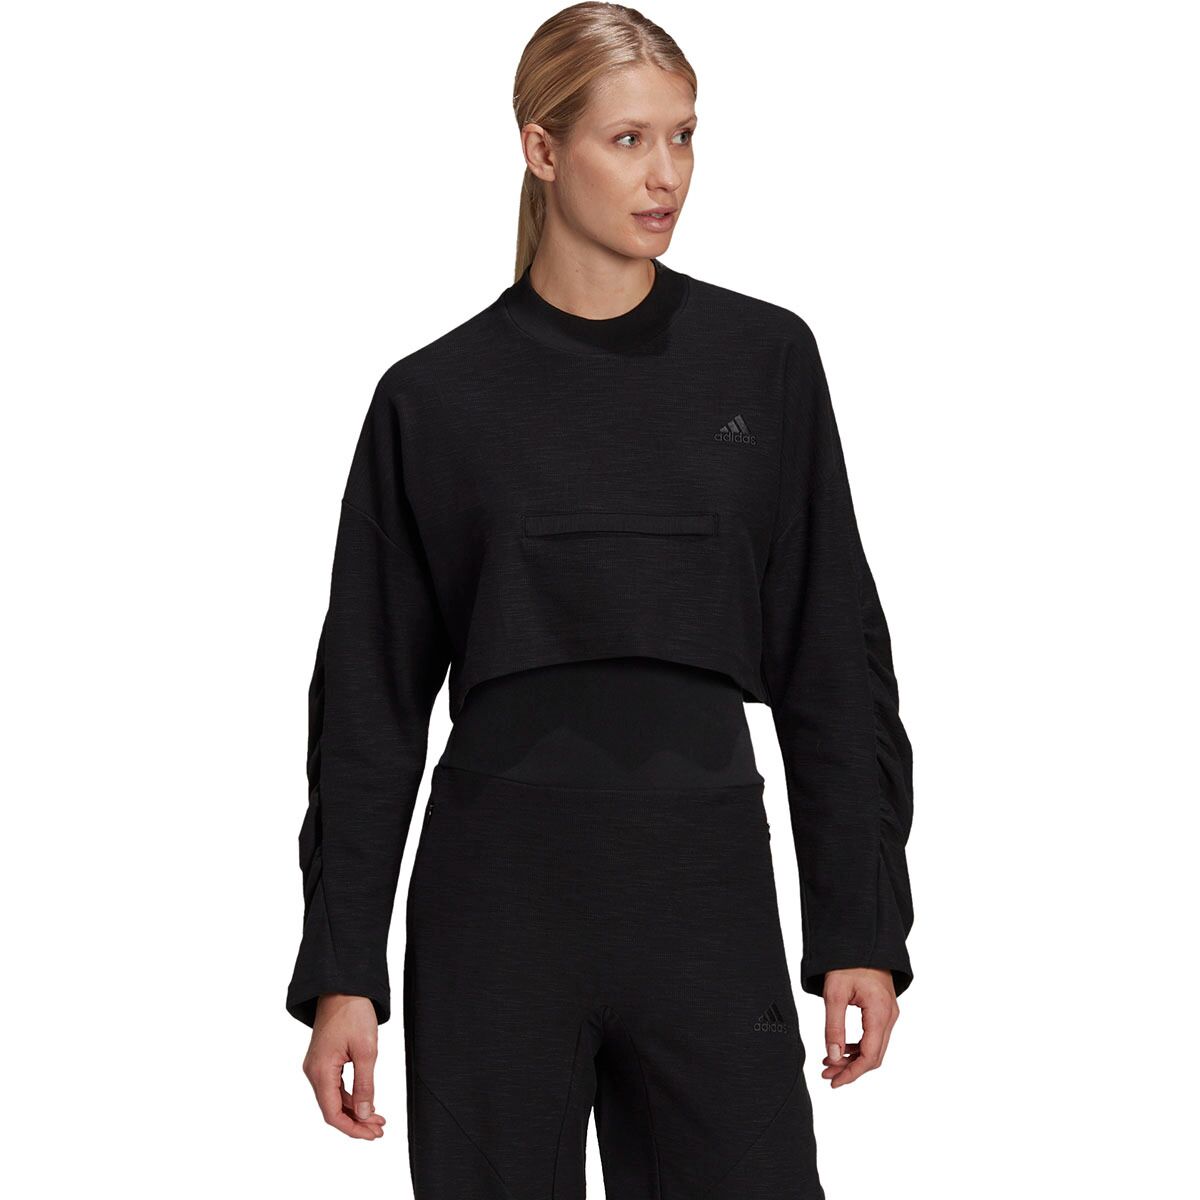 Adidas Yoga Crop Crew Sweatshirt - Women's